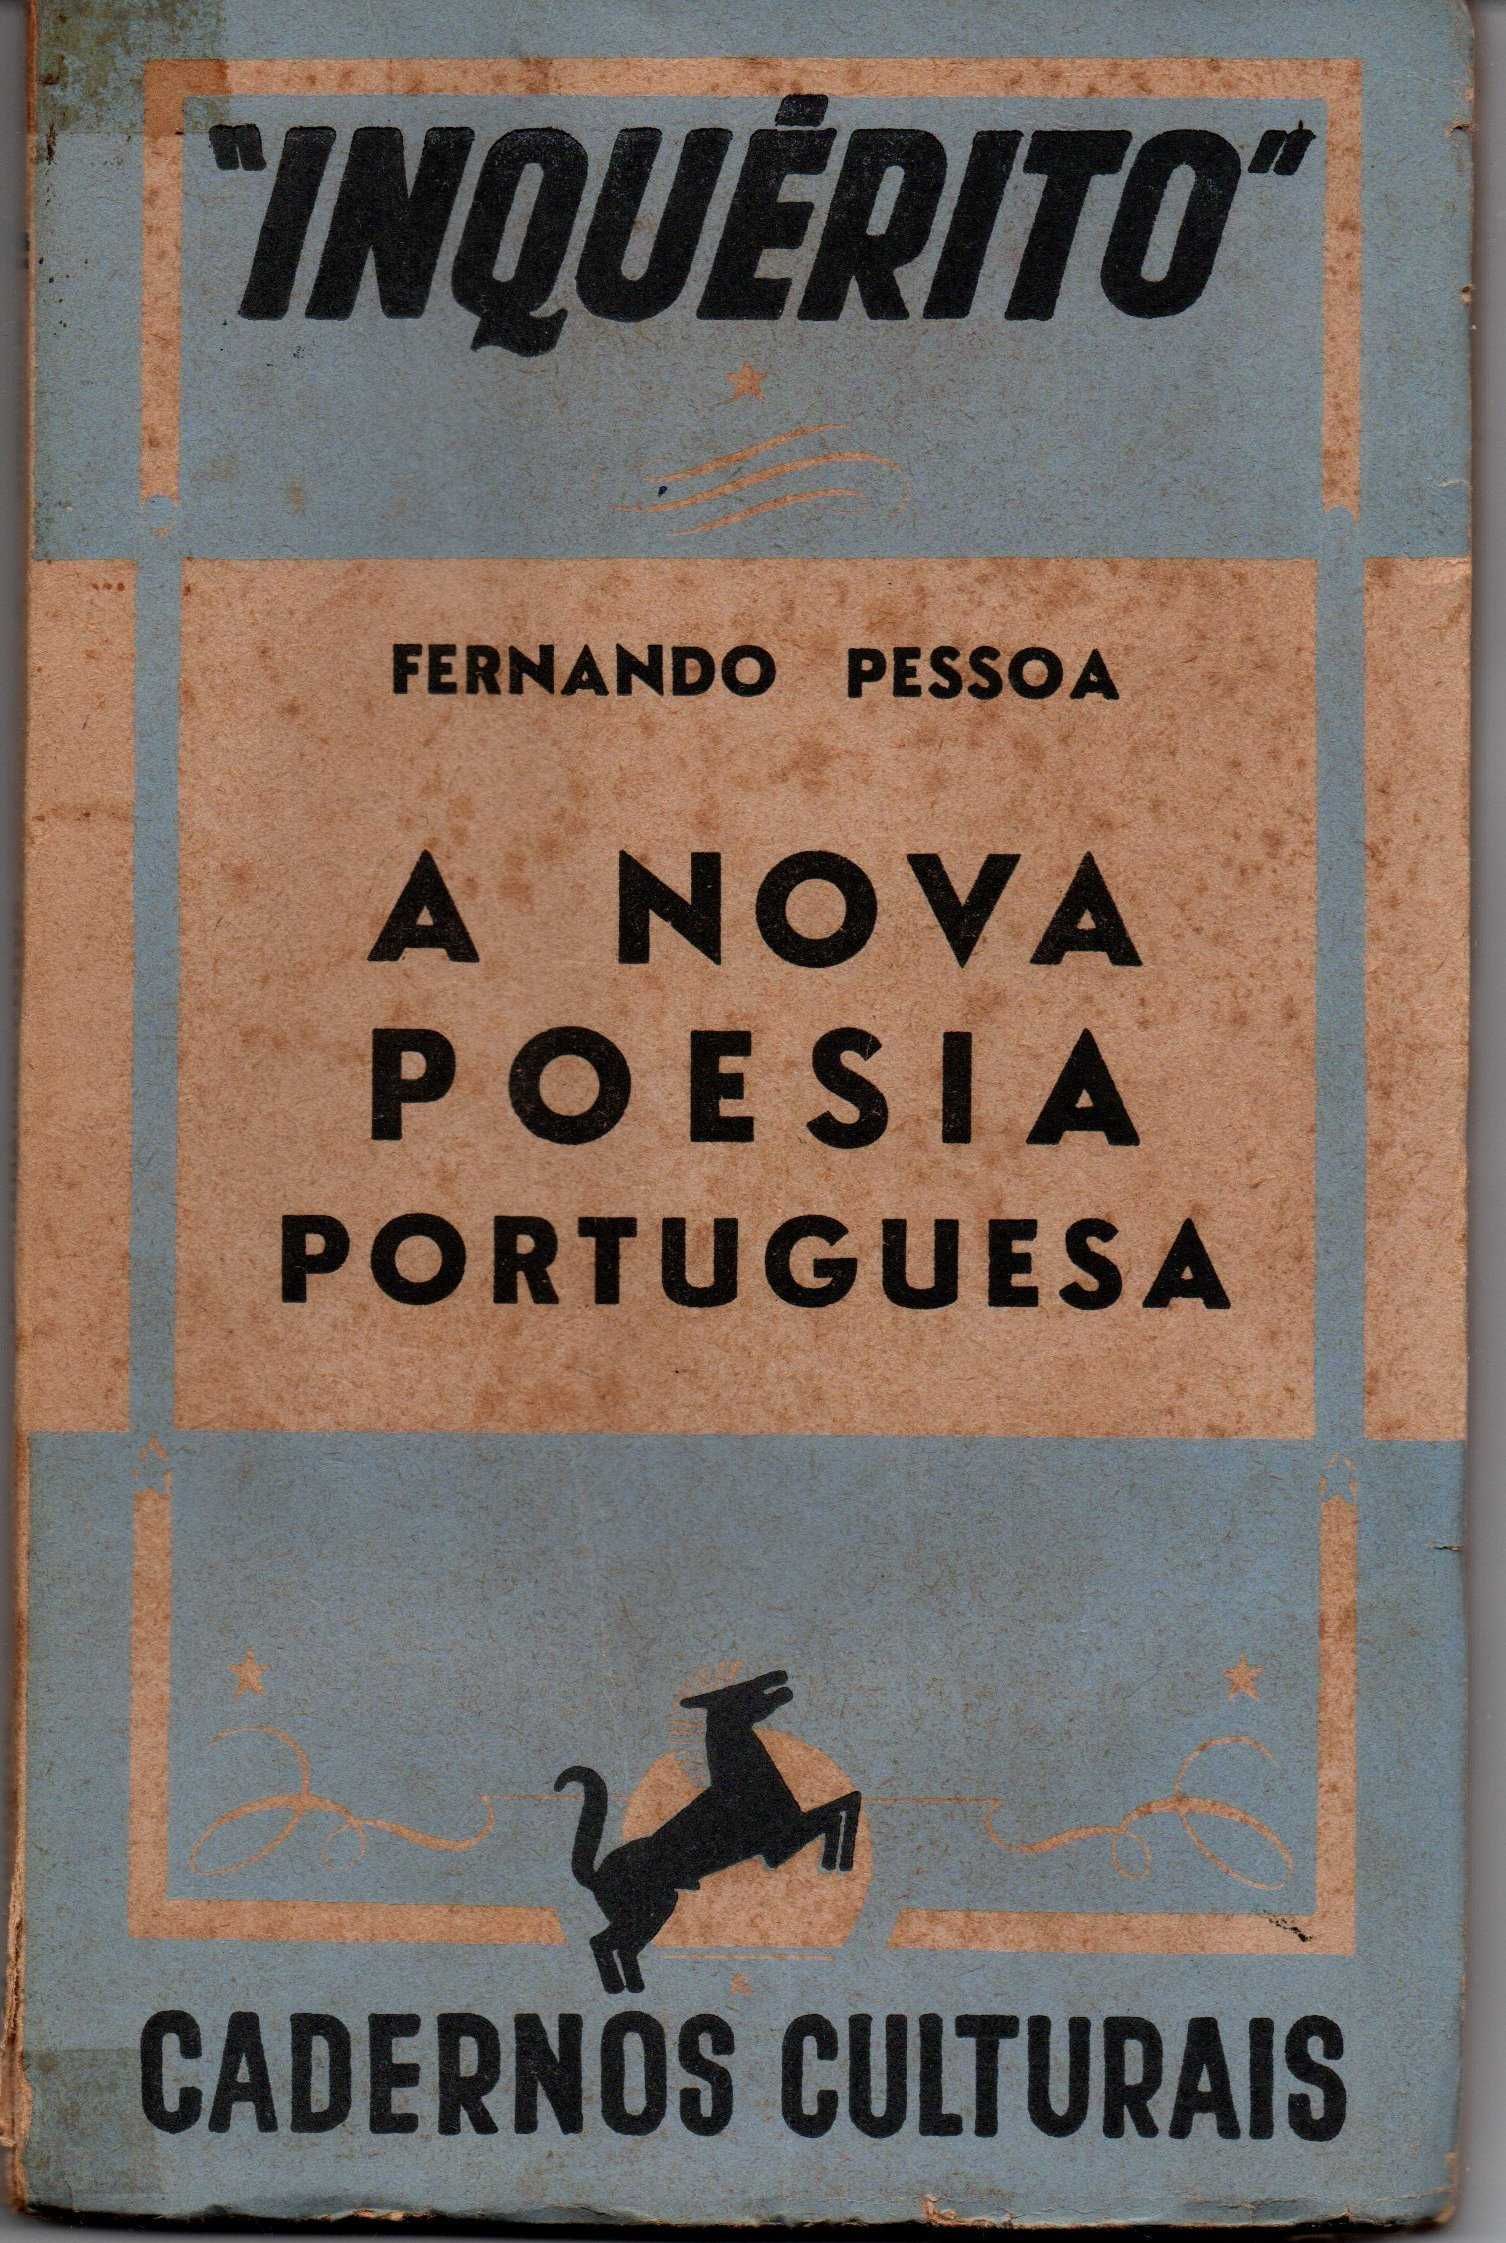 Fernando Pessoa, A nova poesia portuguesa